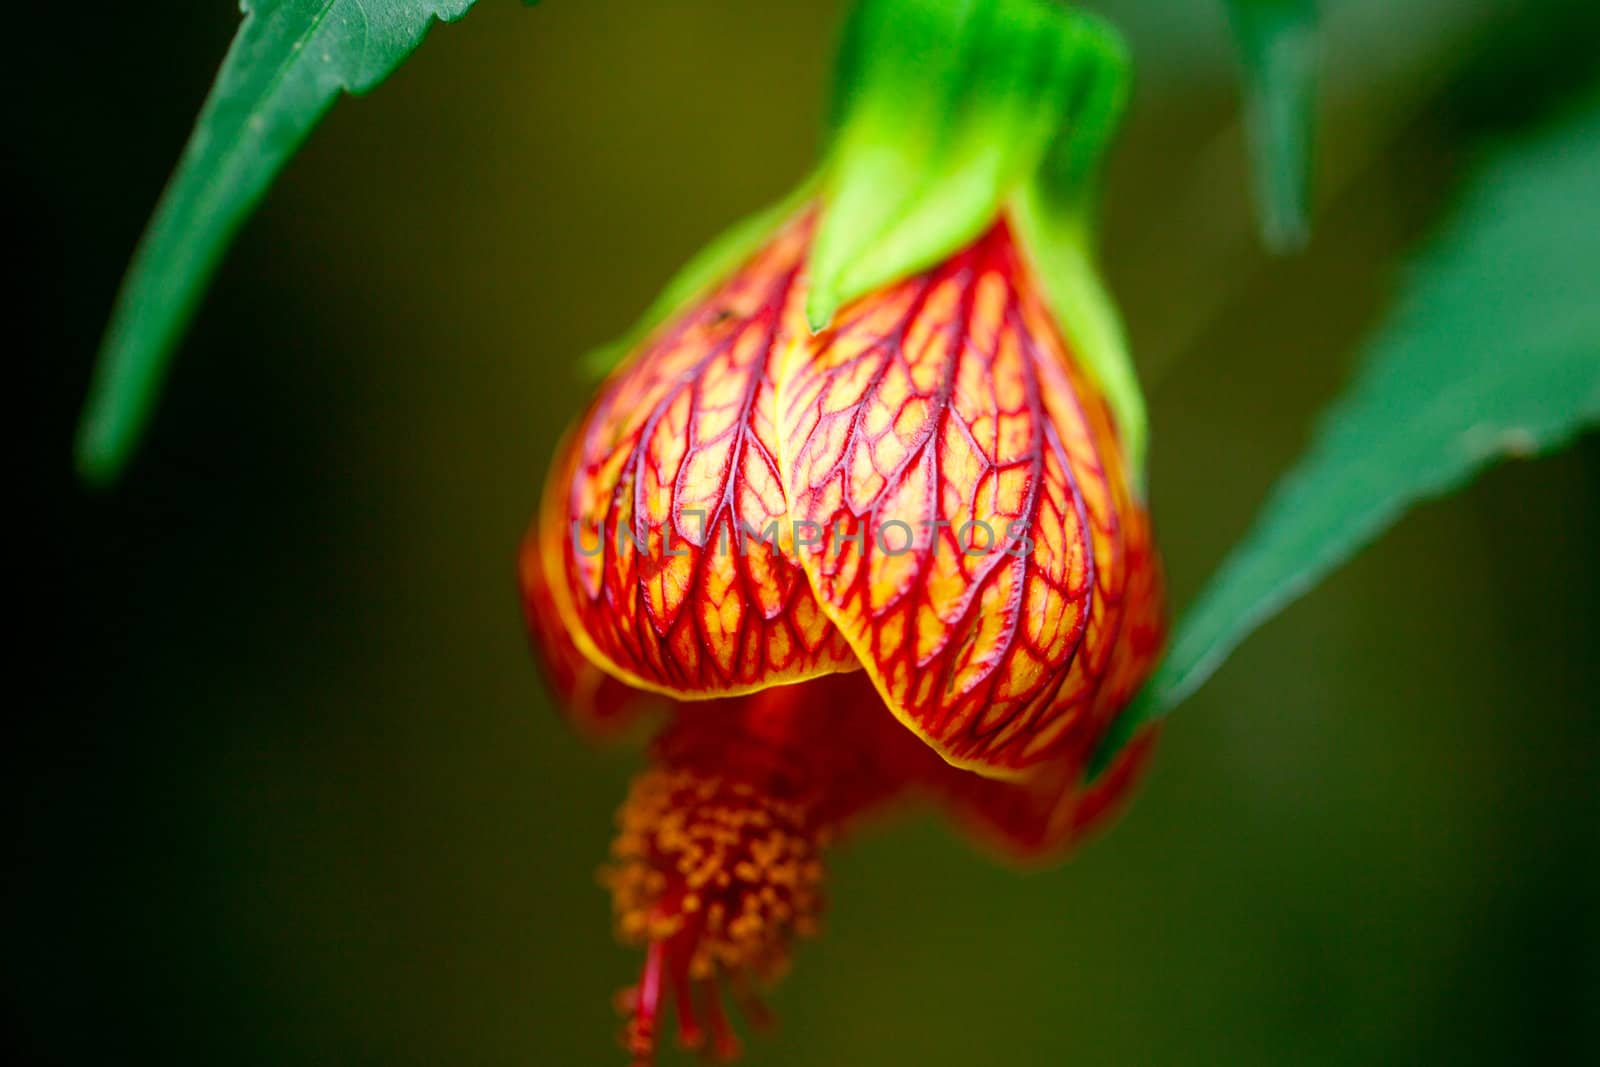 beautiful flower of abutilon close-up